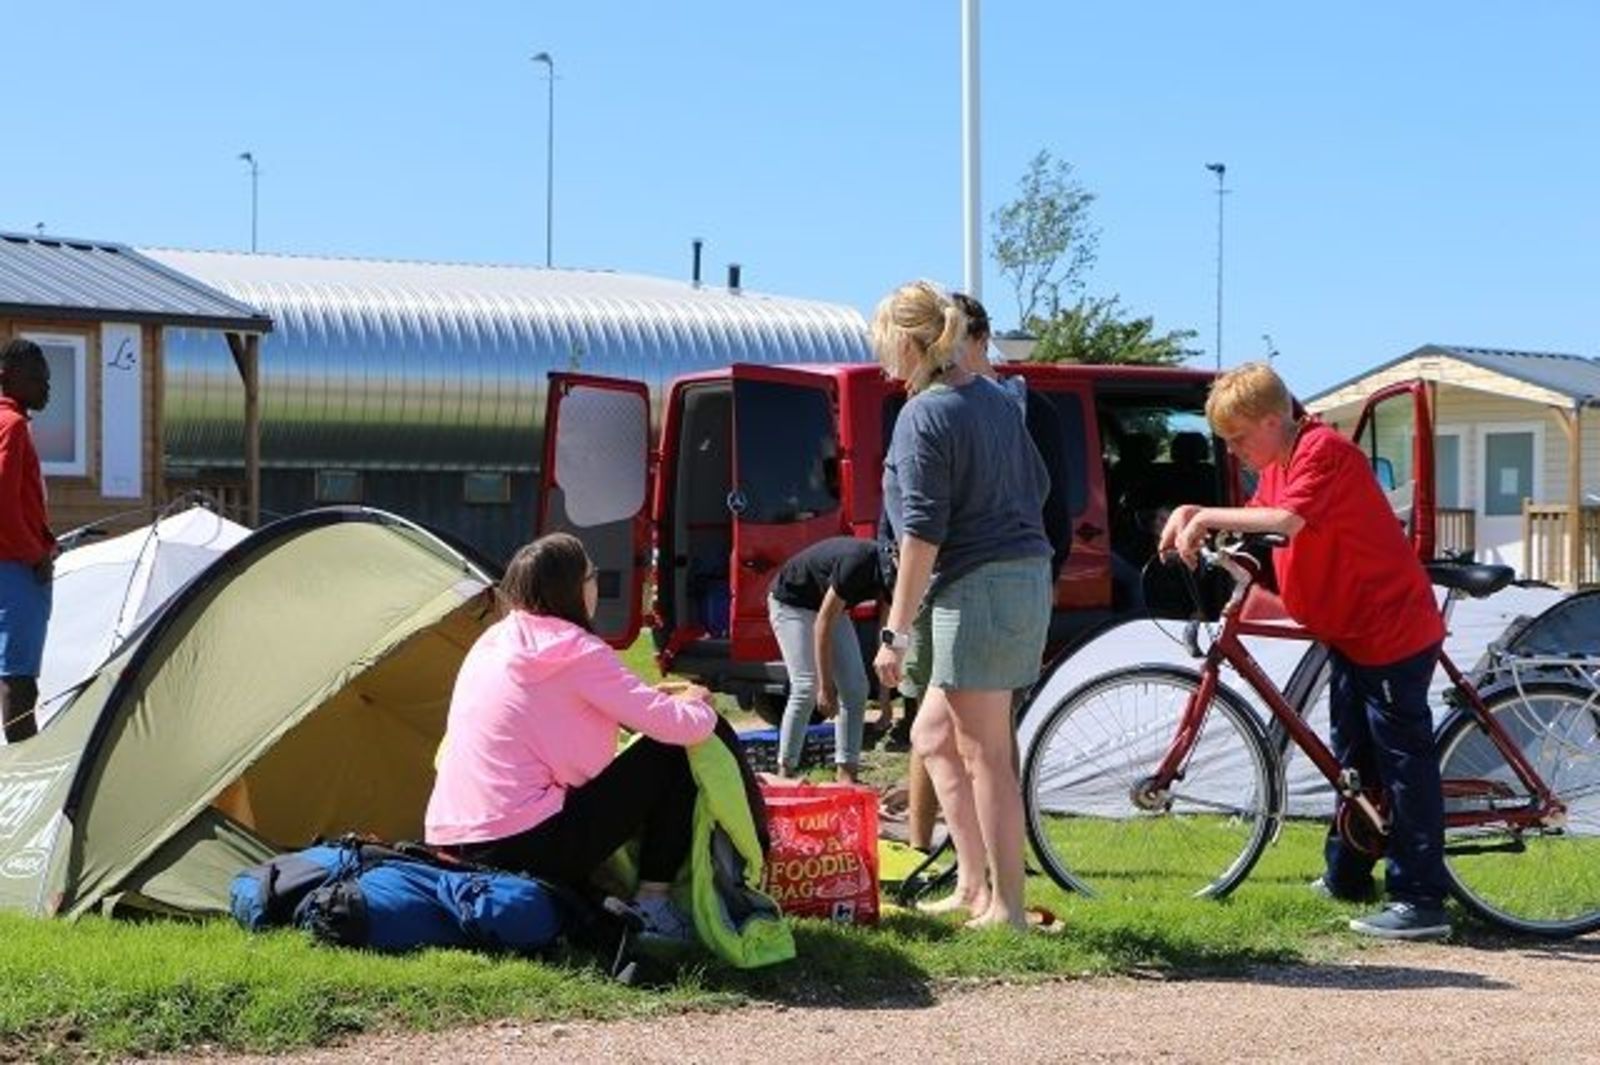 Camping pitch Comfort for caravan / motorhome / tent